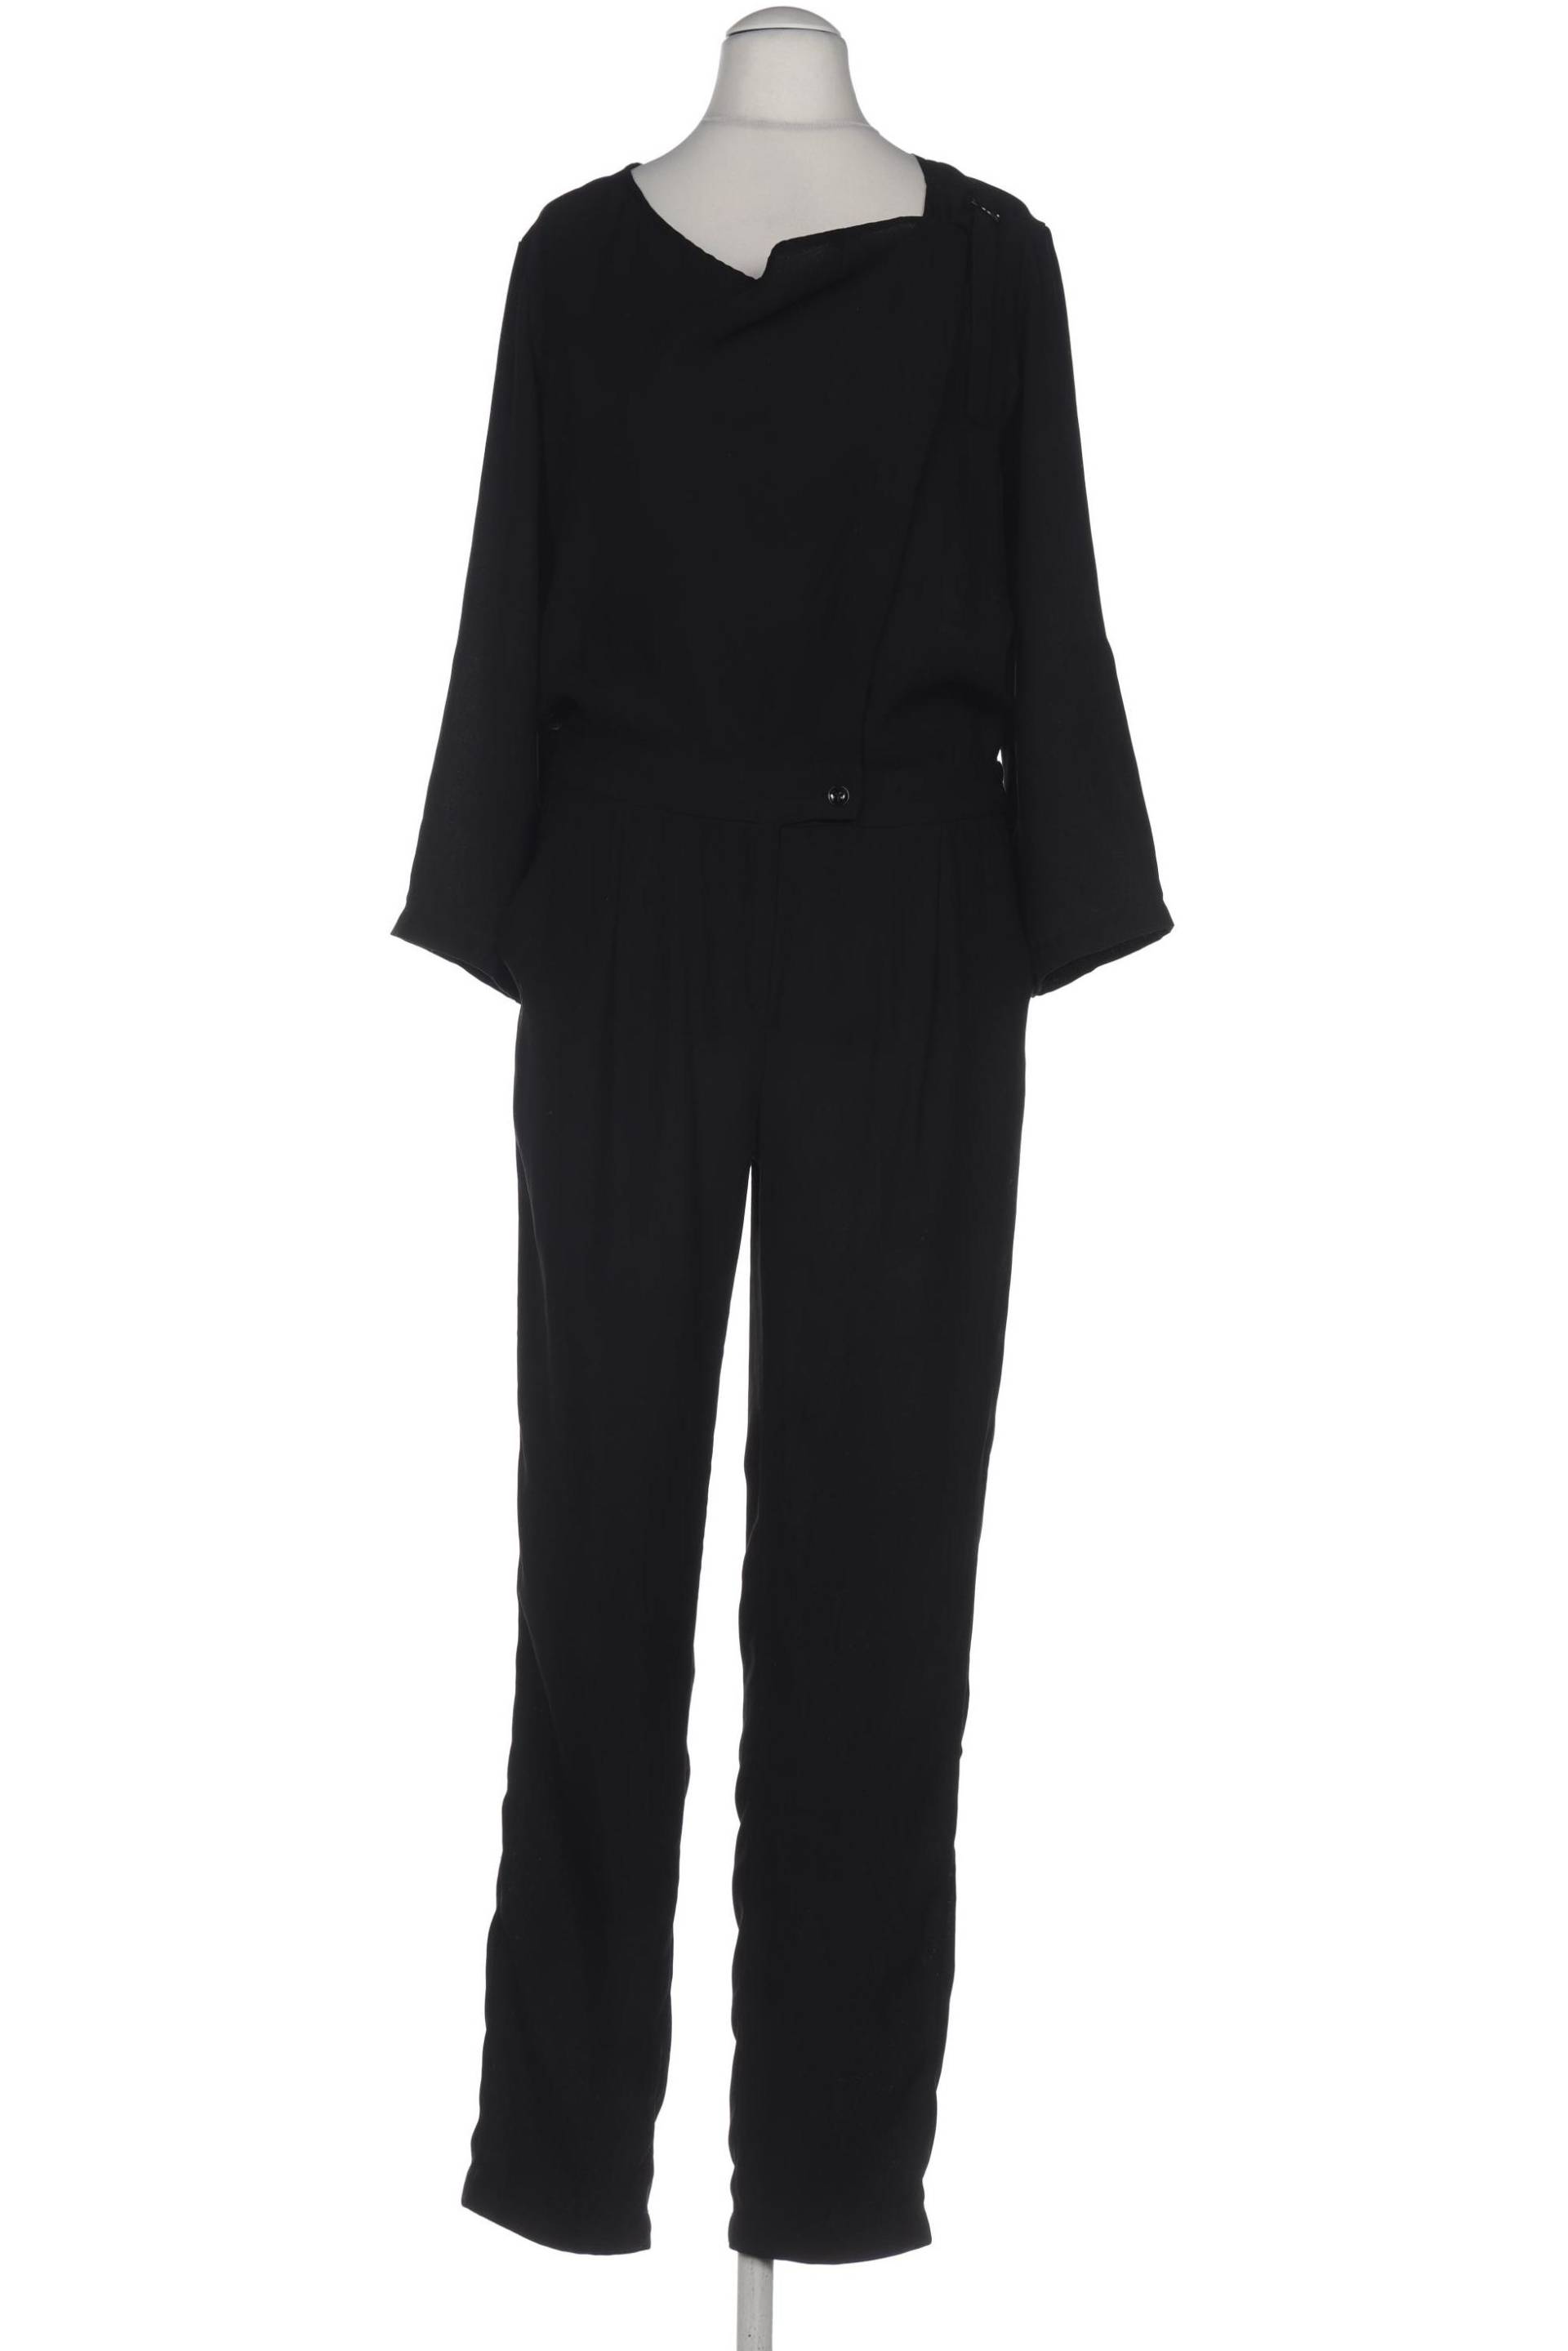 Soaked in Luxury Damen Jumpsuit/Overall, schwarz, Gr. 38 von Soaked in Luxury